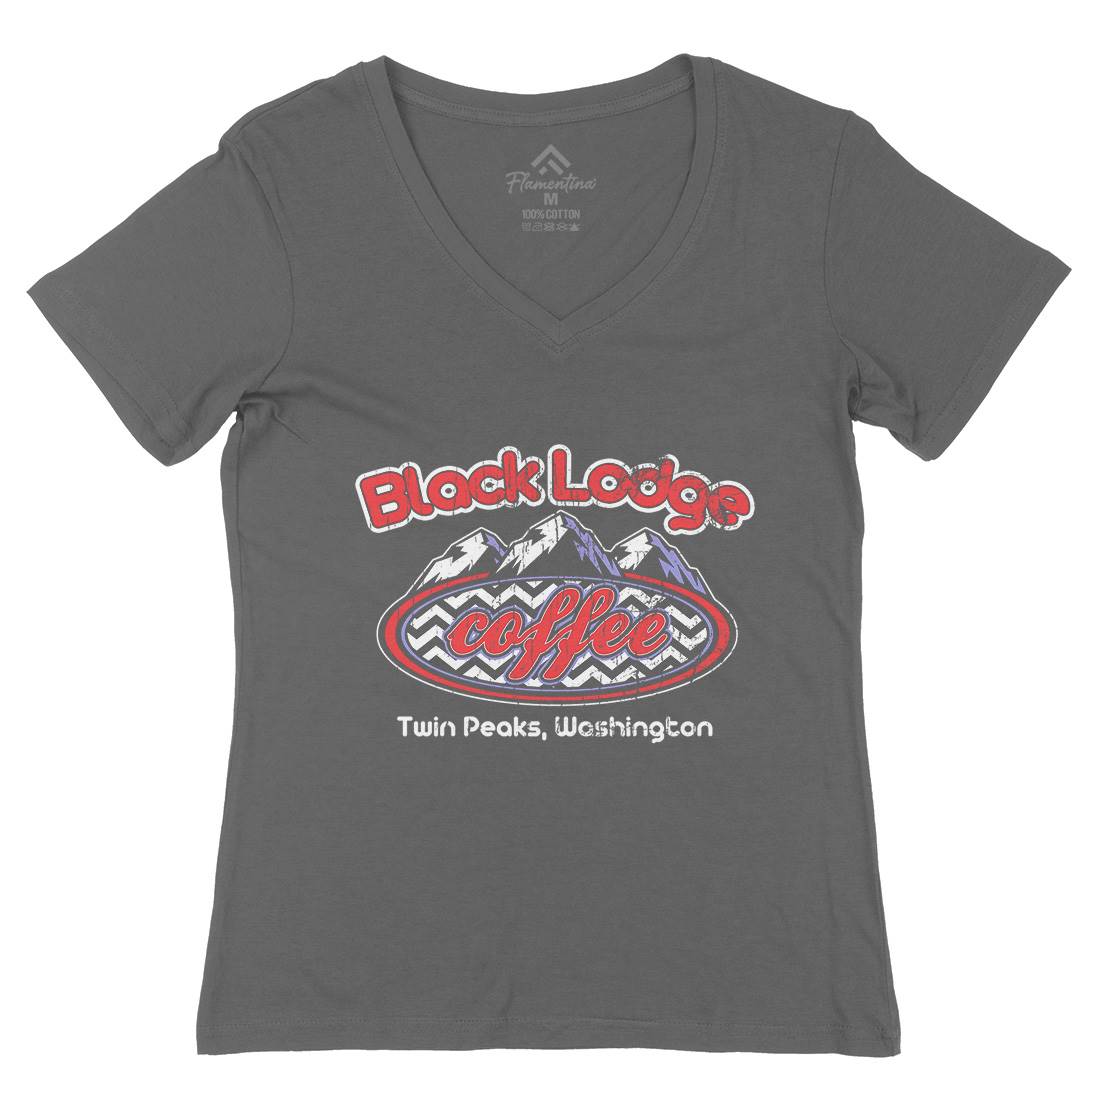 Black Lodge Womens Organic V-Neck T-Shirt Horror D386